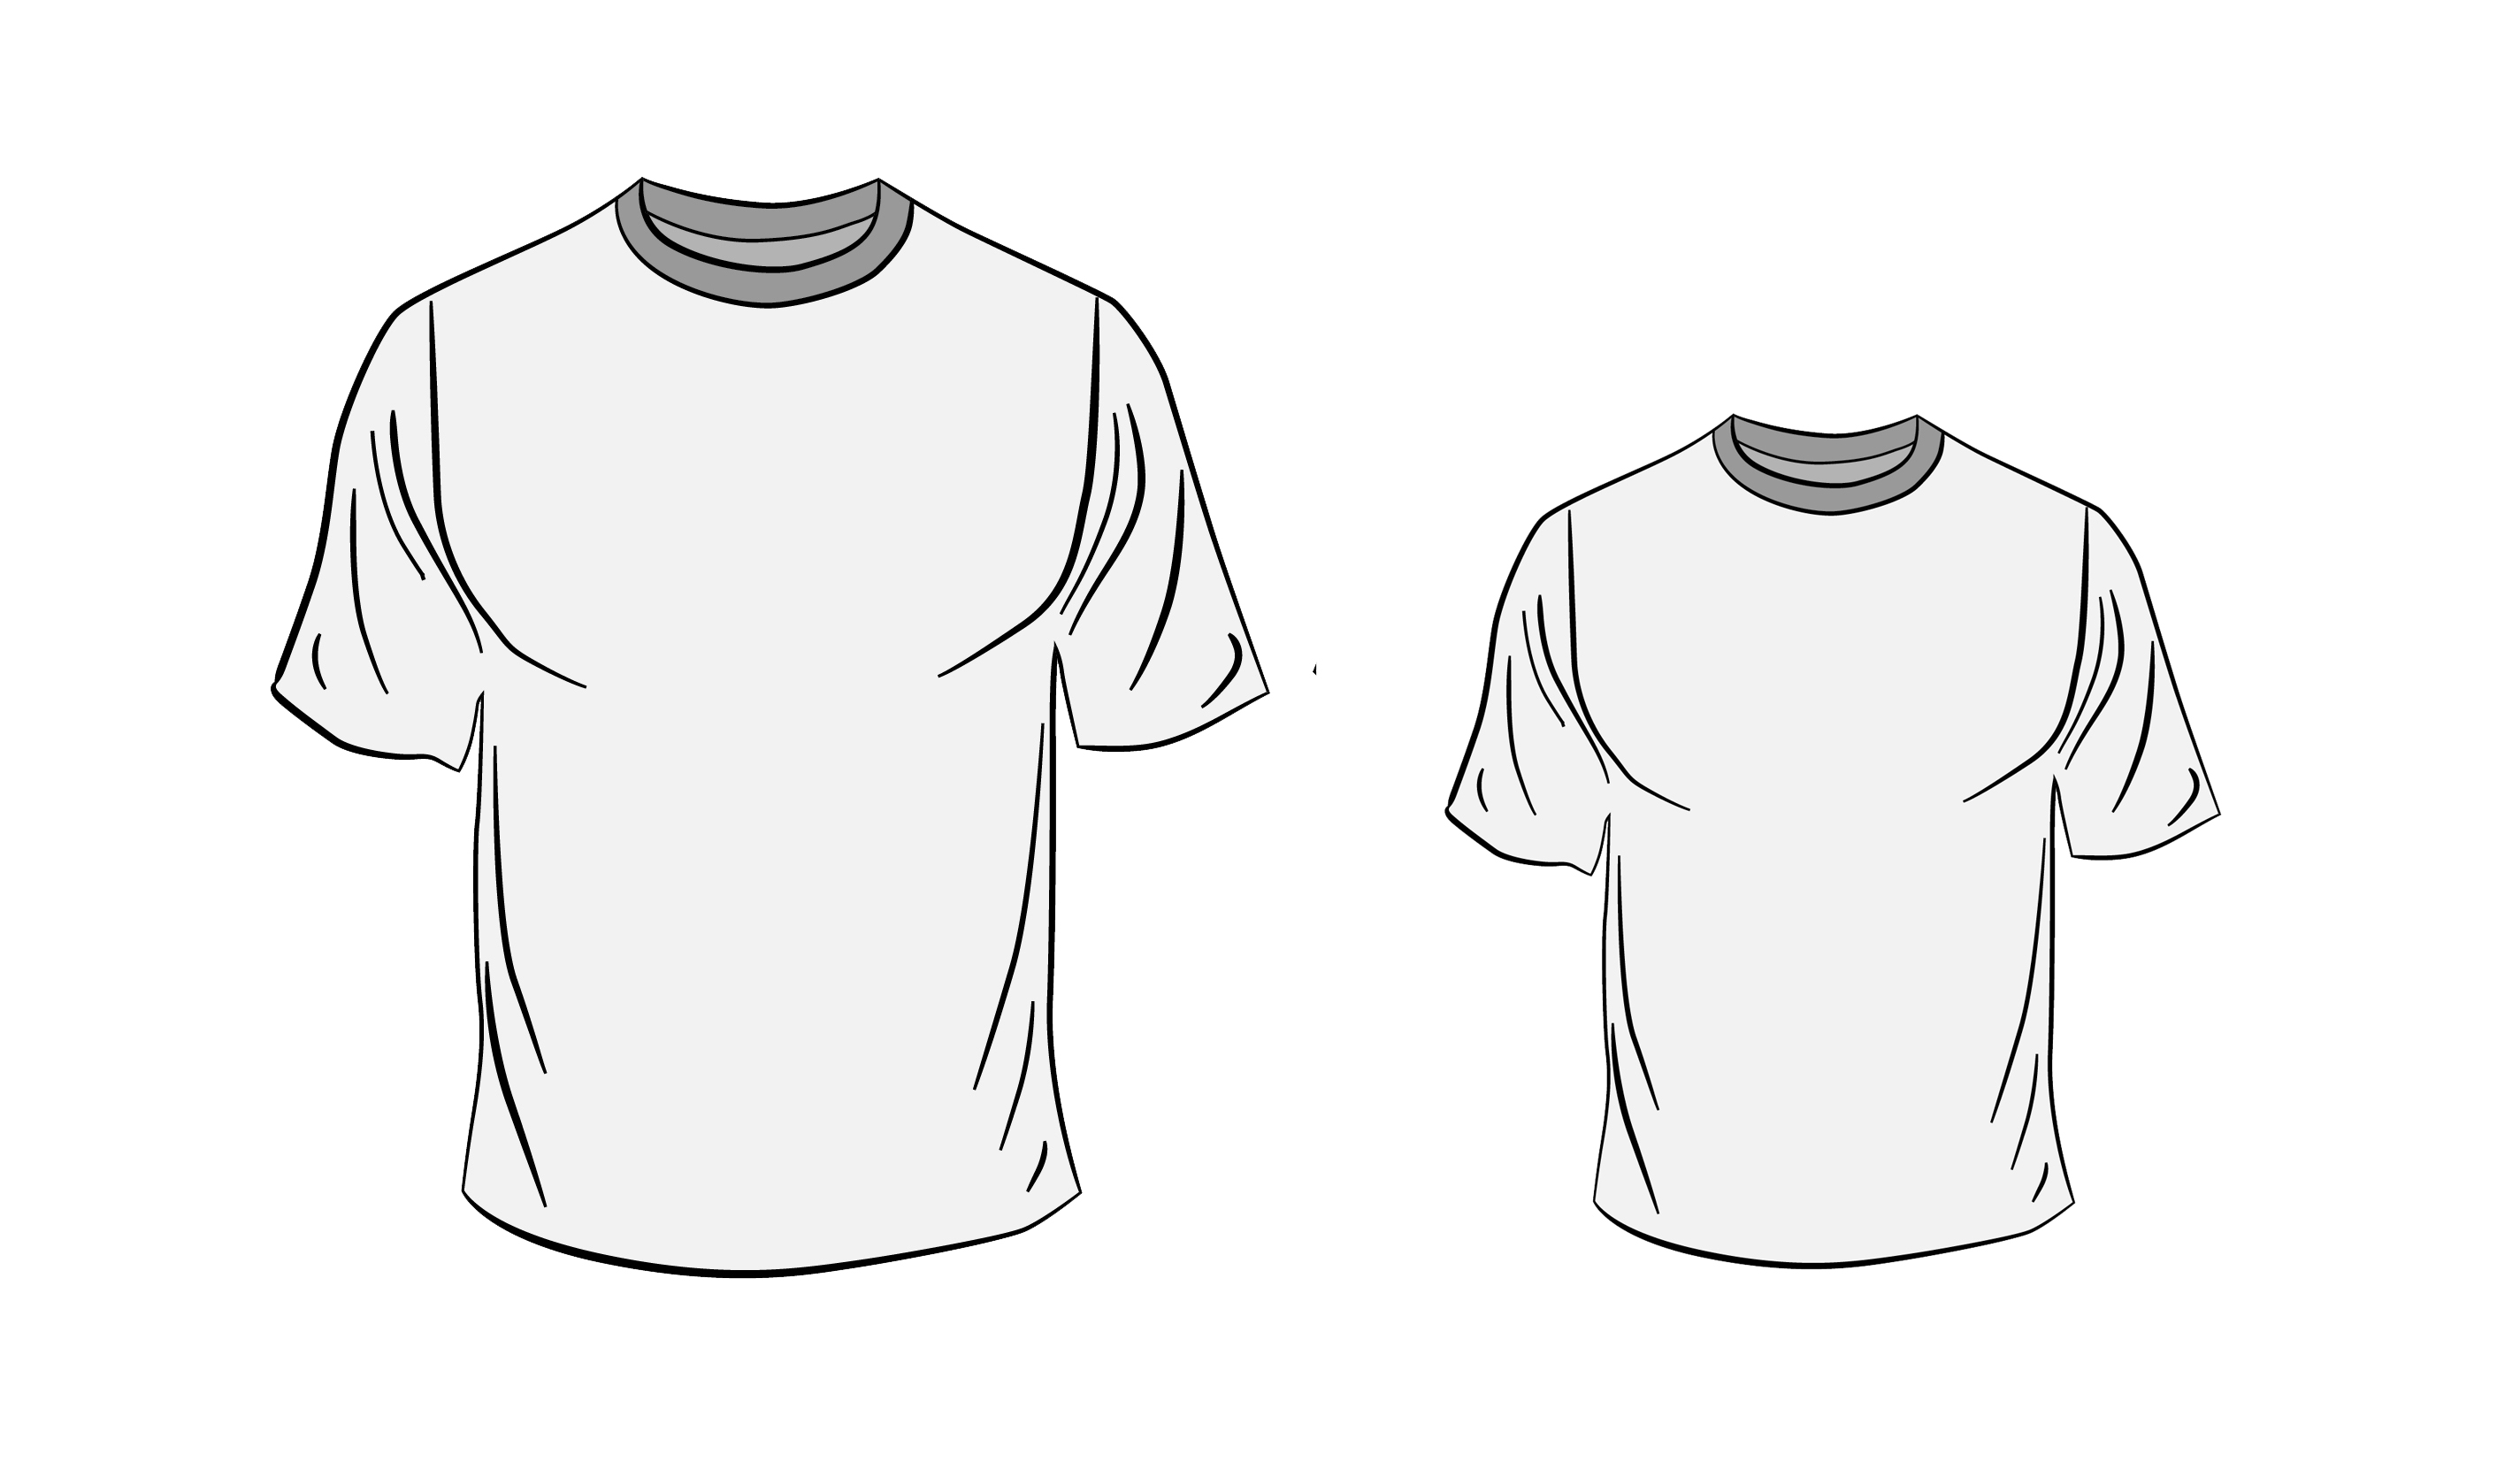 Recollection Irregularities common sense Μάζεψε το αγαπημένο σου μπλουζάκι στο πλύσιμο; Δες 3 απλά βήματα για να το  επαναφέρεις στο αρχικό του μέγεθος! - Fanpage